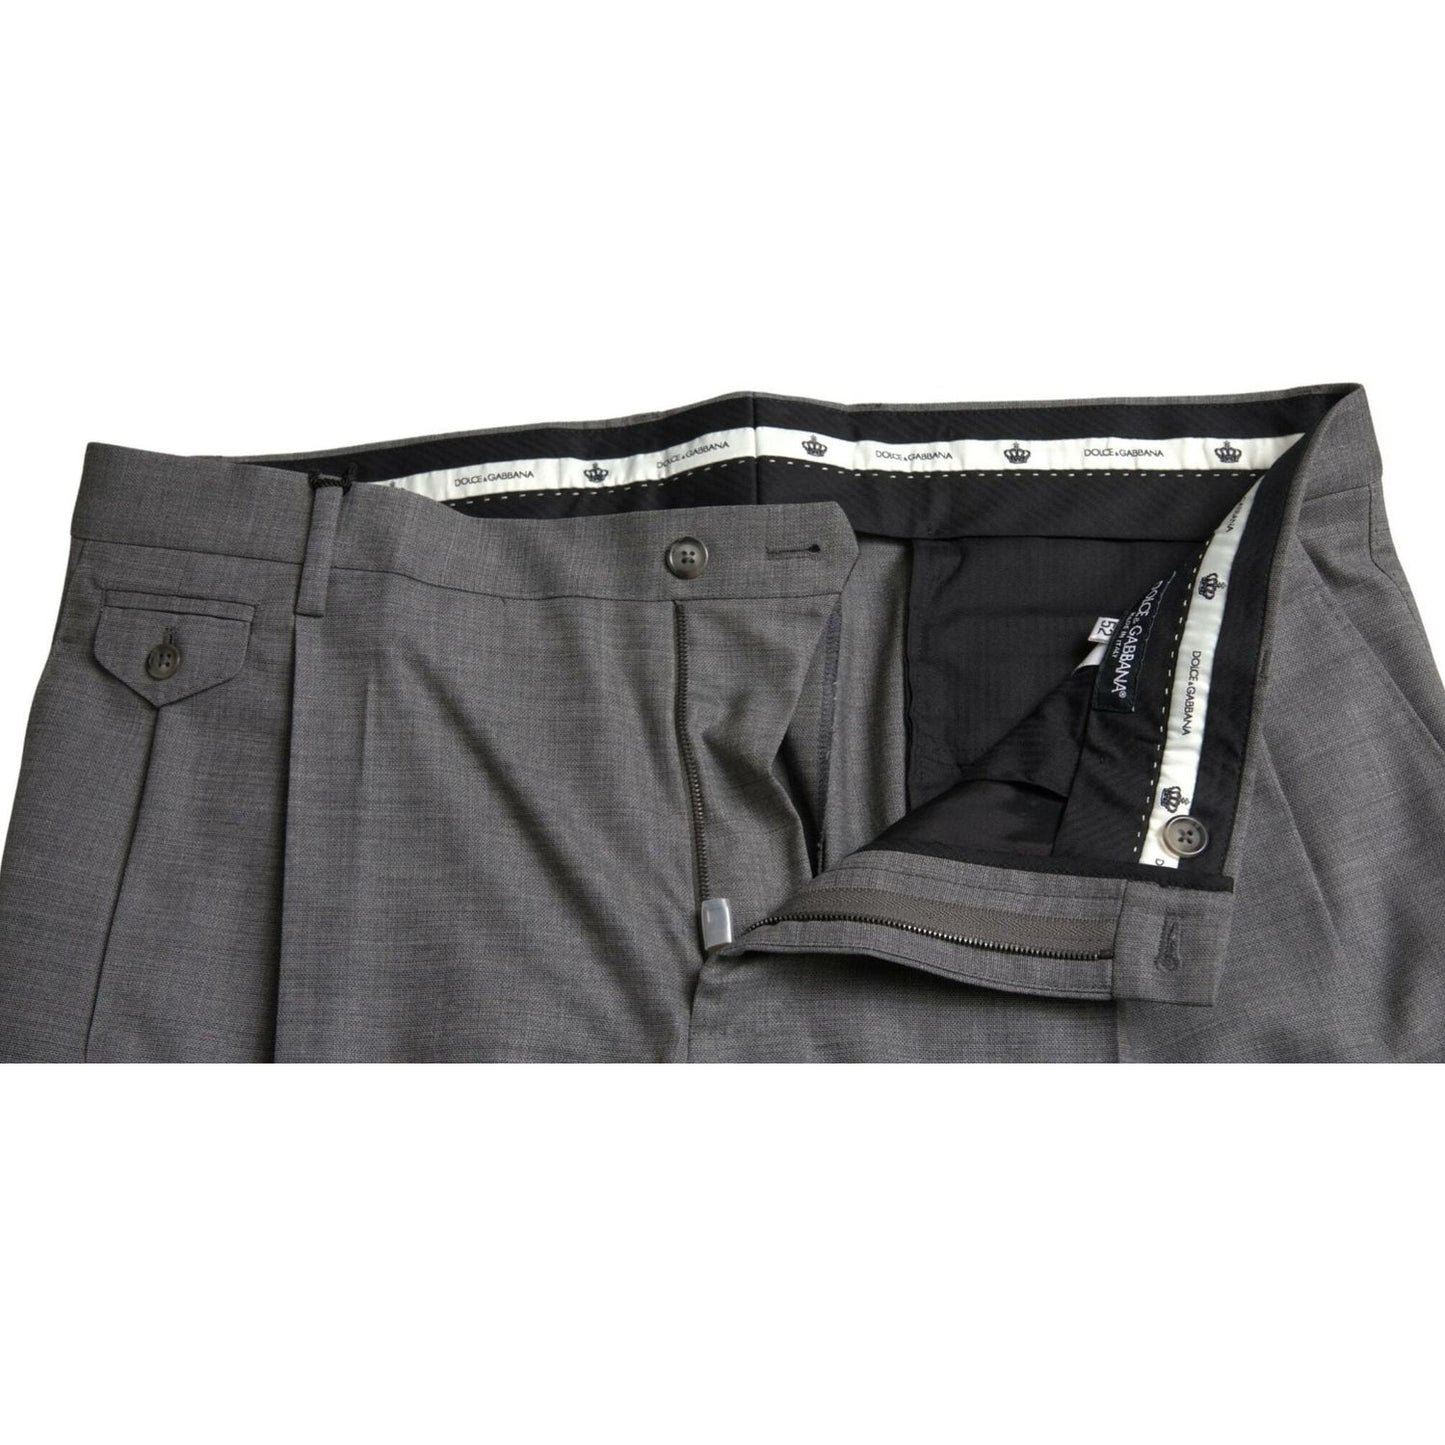 Dolce & Gabbana Elegant Skinny Wool Dress Pants in Grey gray-wool-chino-skinny-men-dress-trouser-pants 465A9105bg-scaled-9ac96b40-74c.jpg